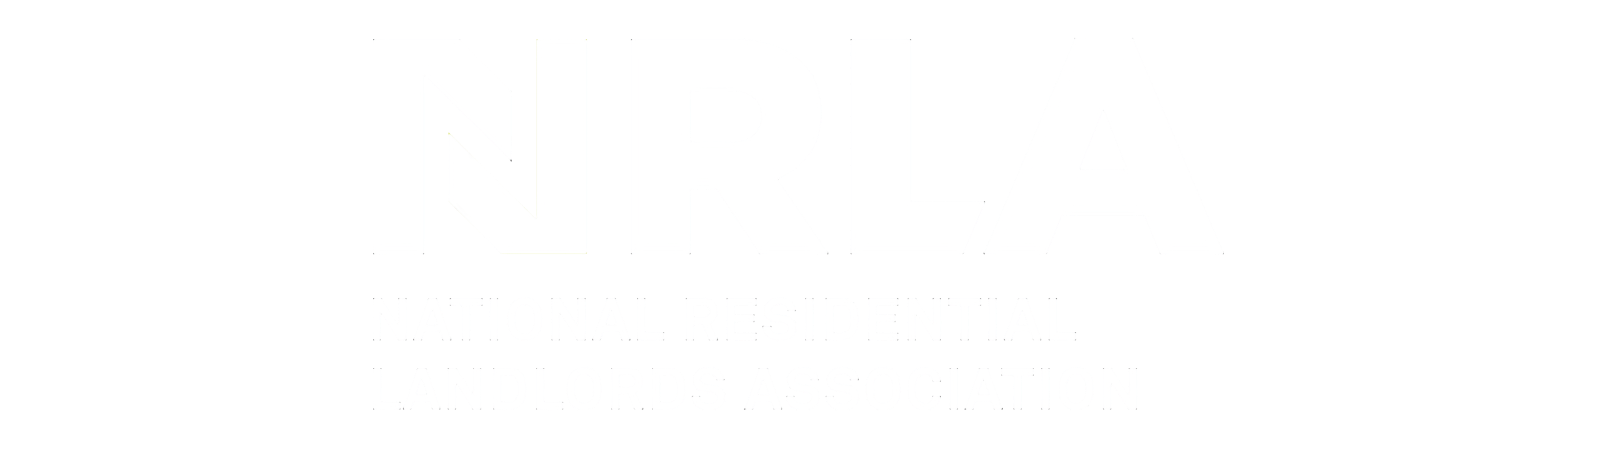 National Residential Landlords Association Logo